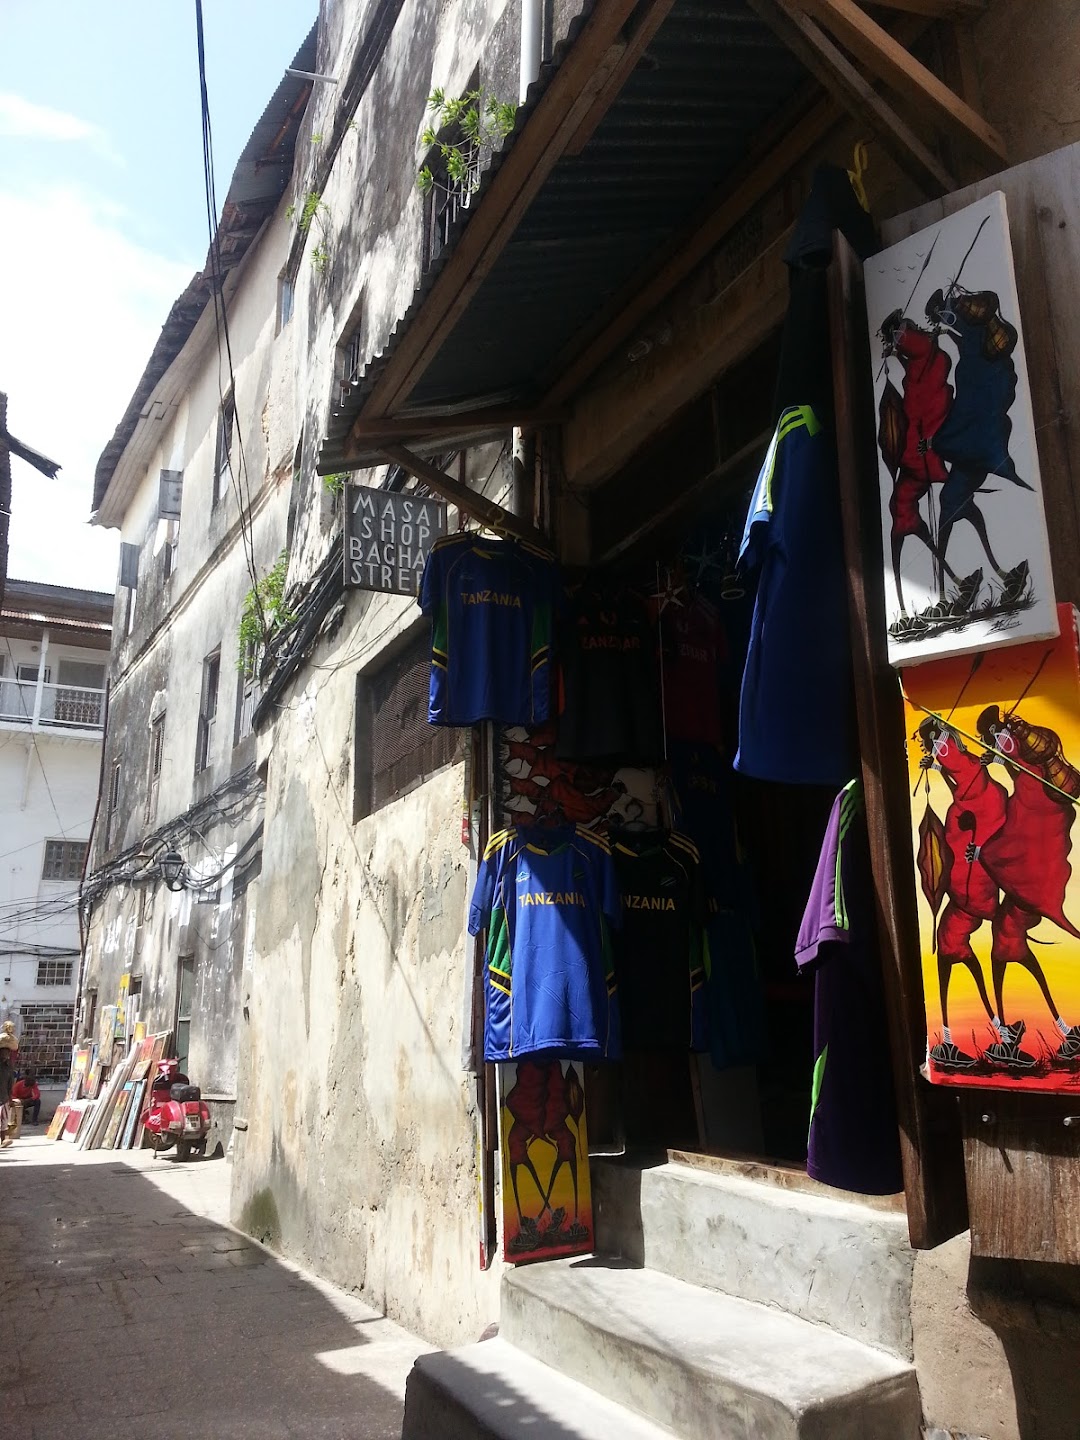 Masai shop baghani street